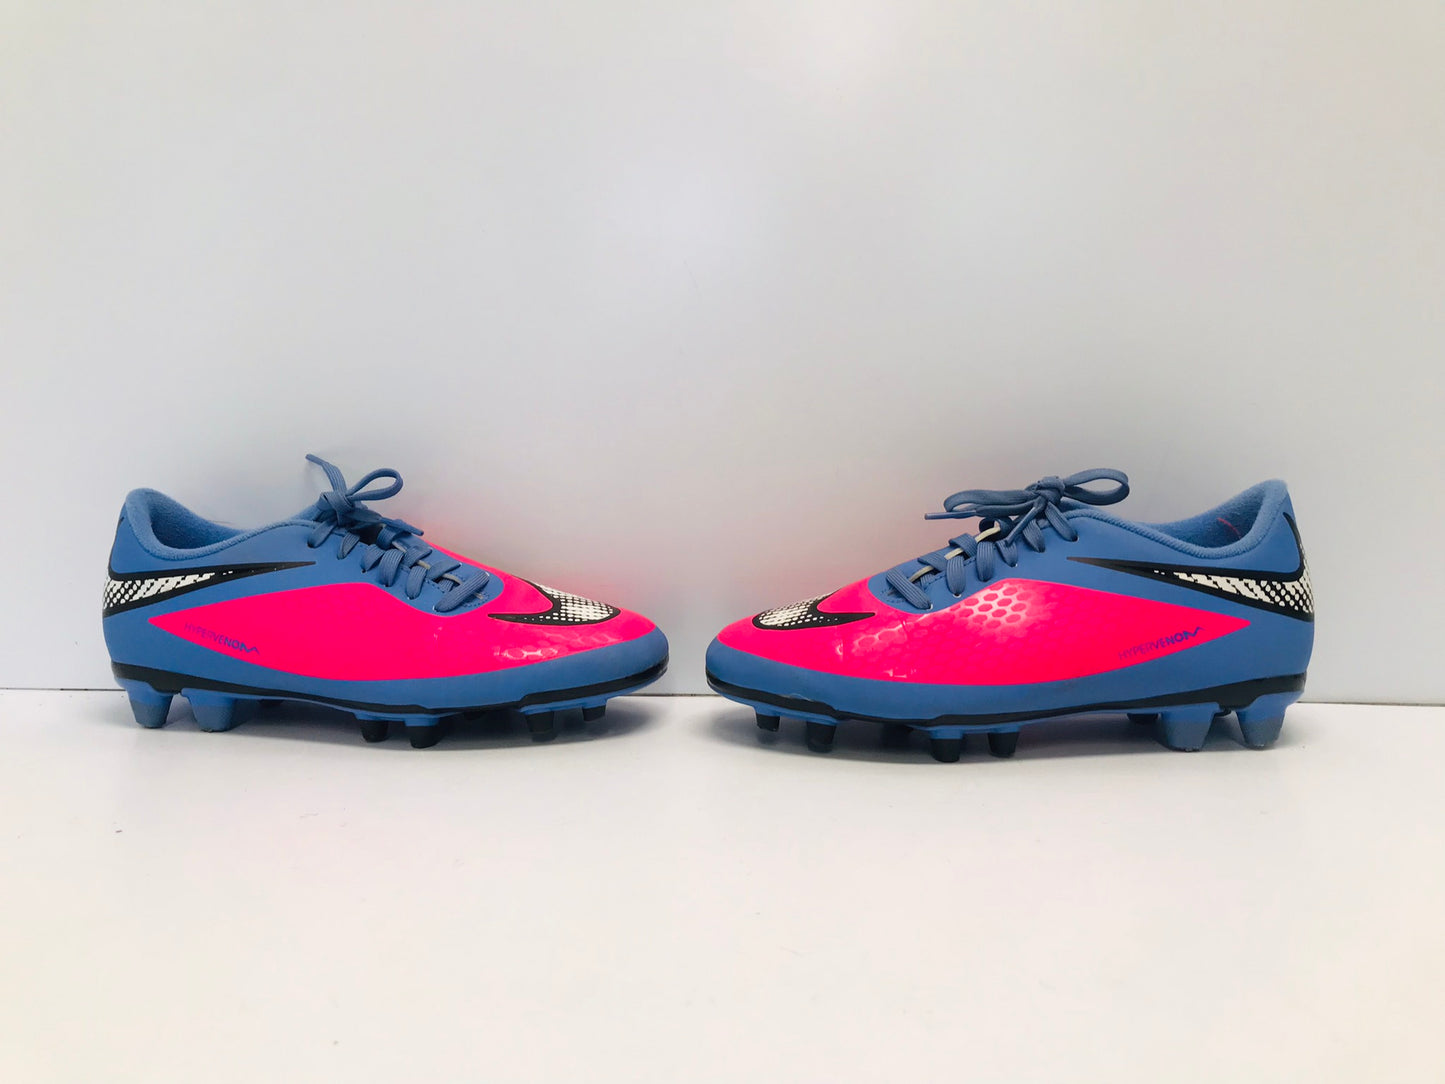 Soccer Shoes Cleats Child Size 5.5 Nike Hypervenom Blue Pink New Demo Model